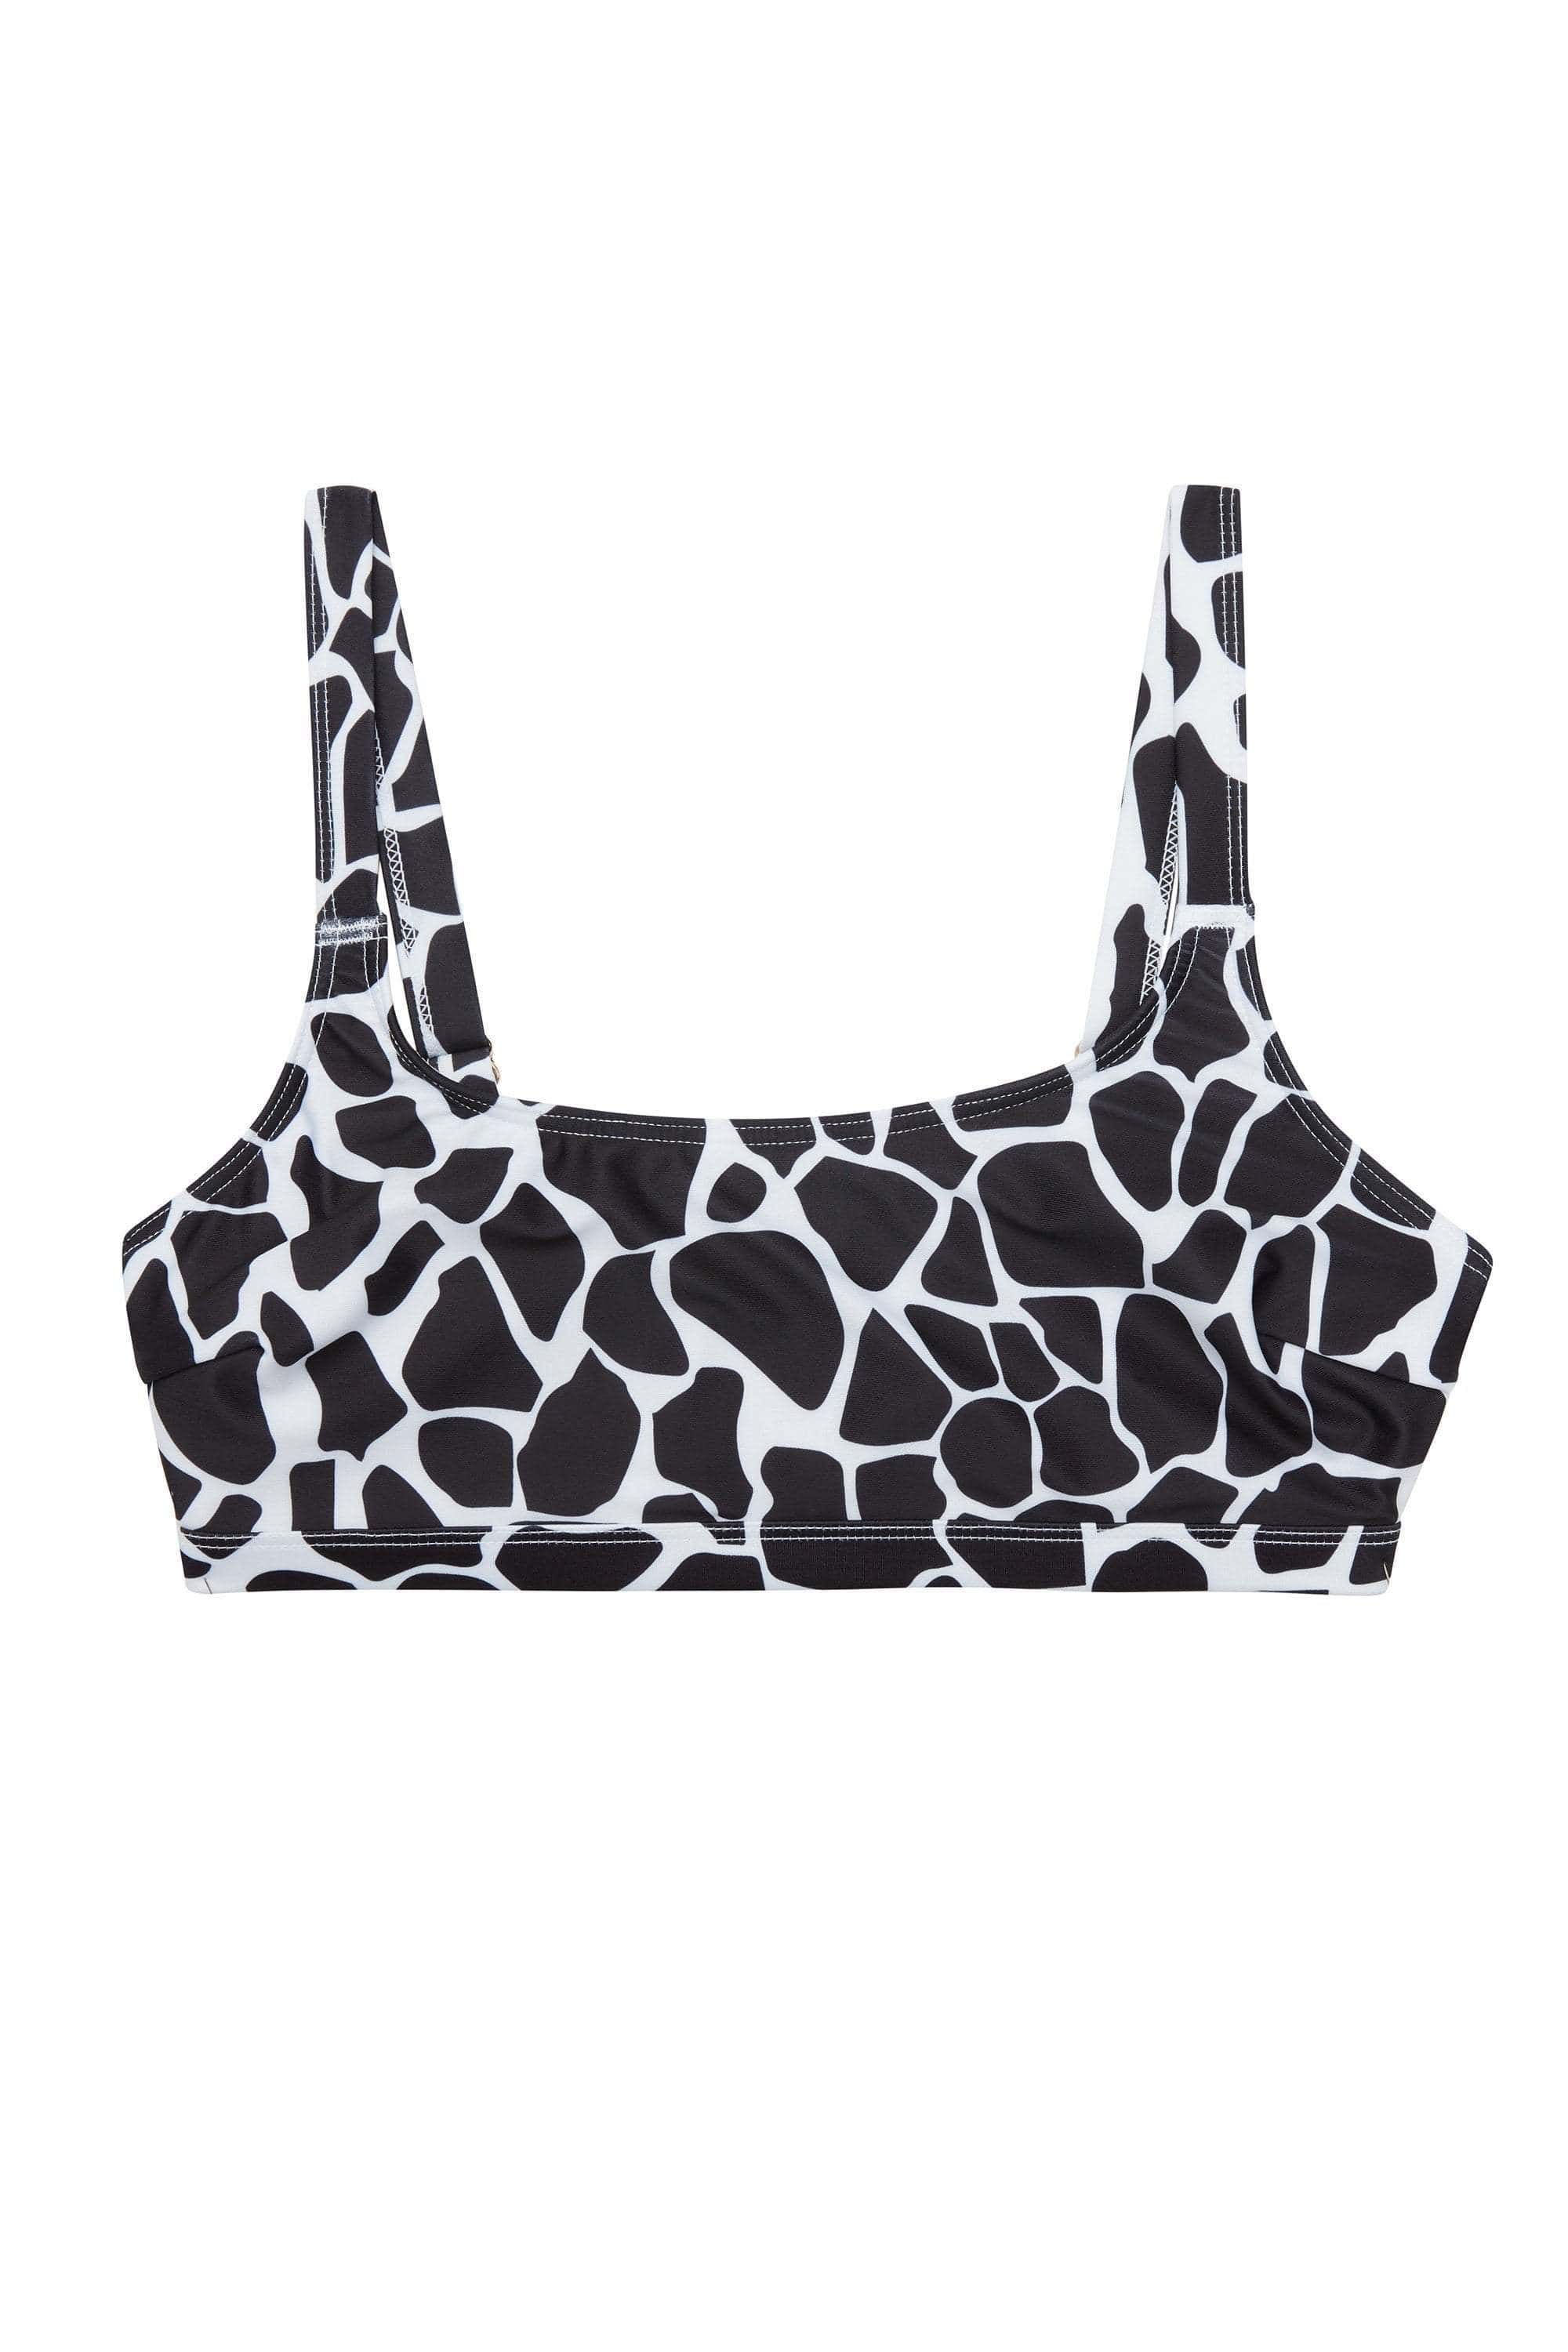 Wolf & Whistle White Eco Giraffe Full Bust Bikini Top D - F Cups